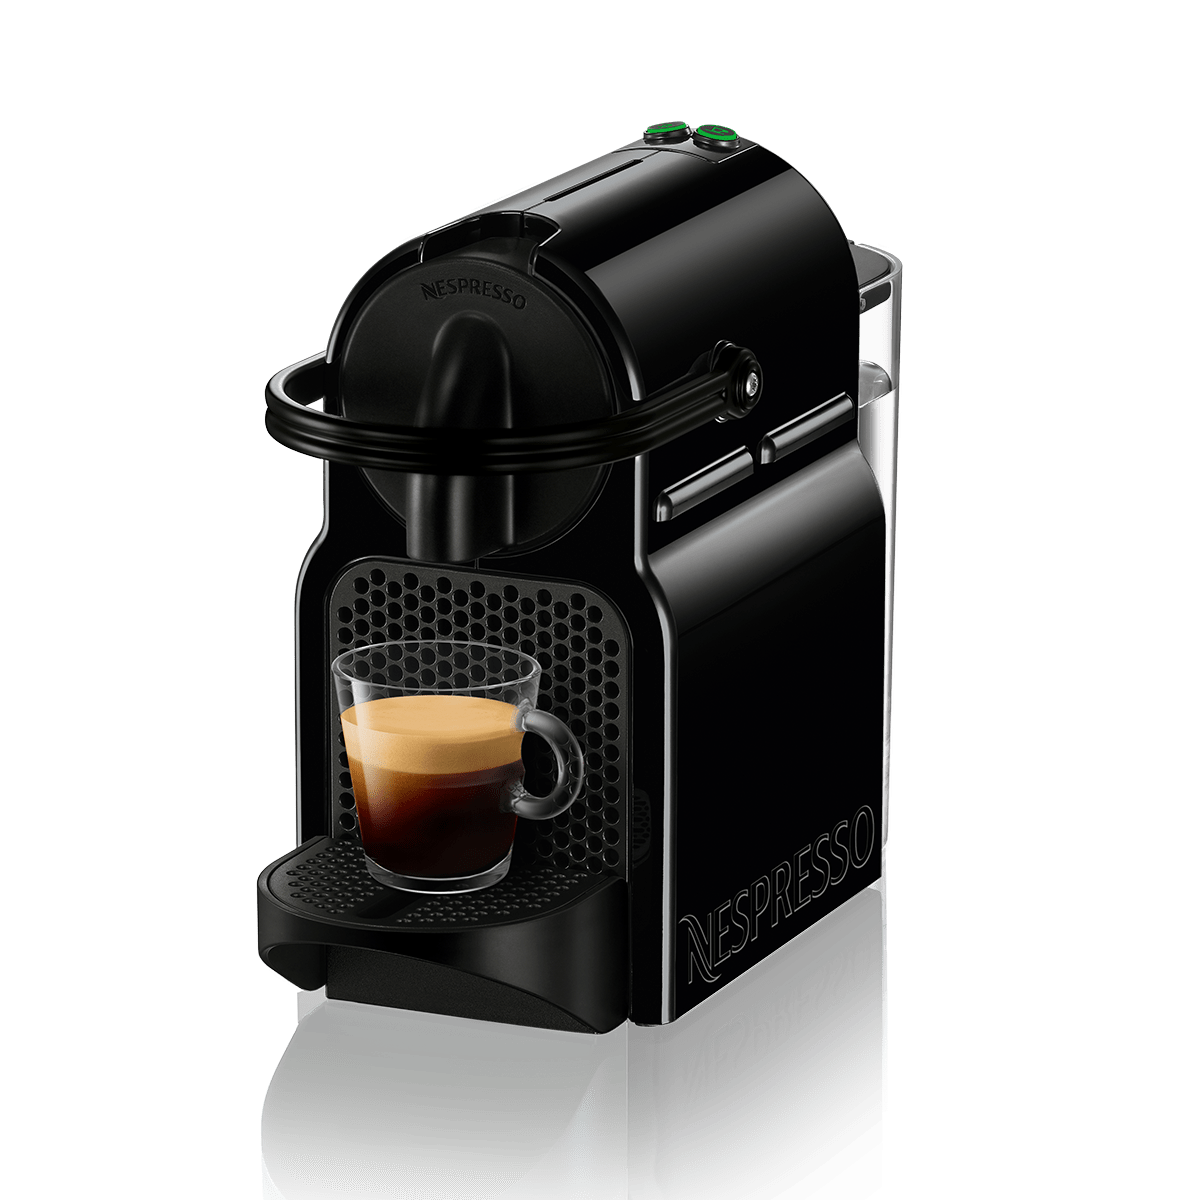 Espressor Nespresso Inissia Black 2